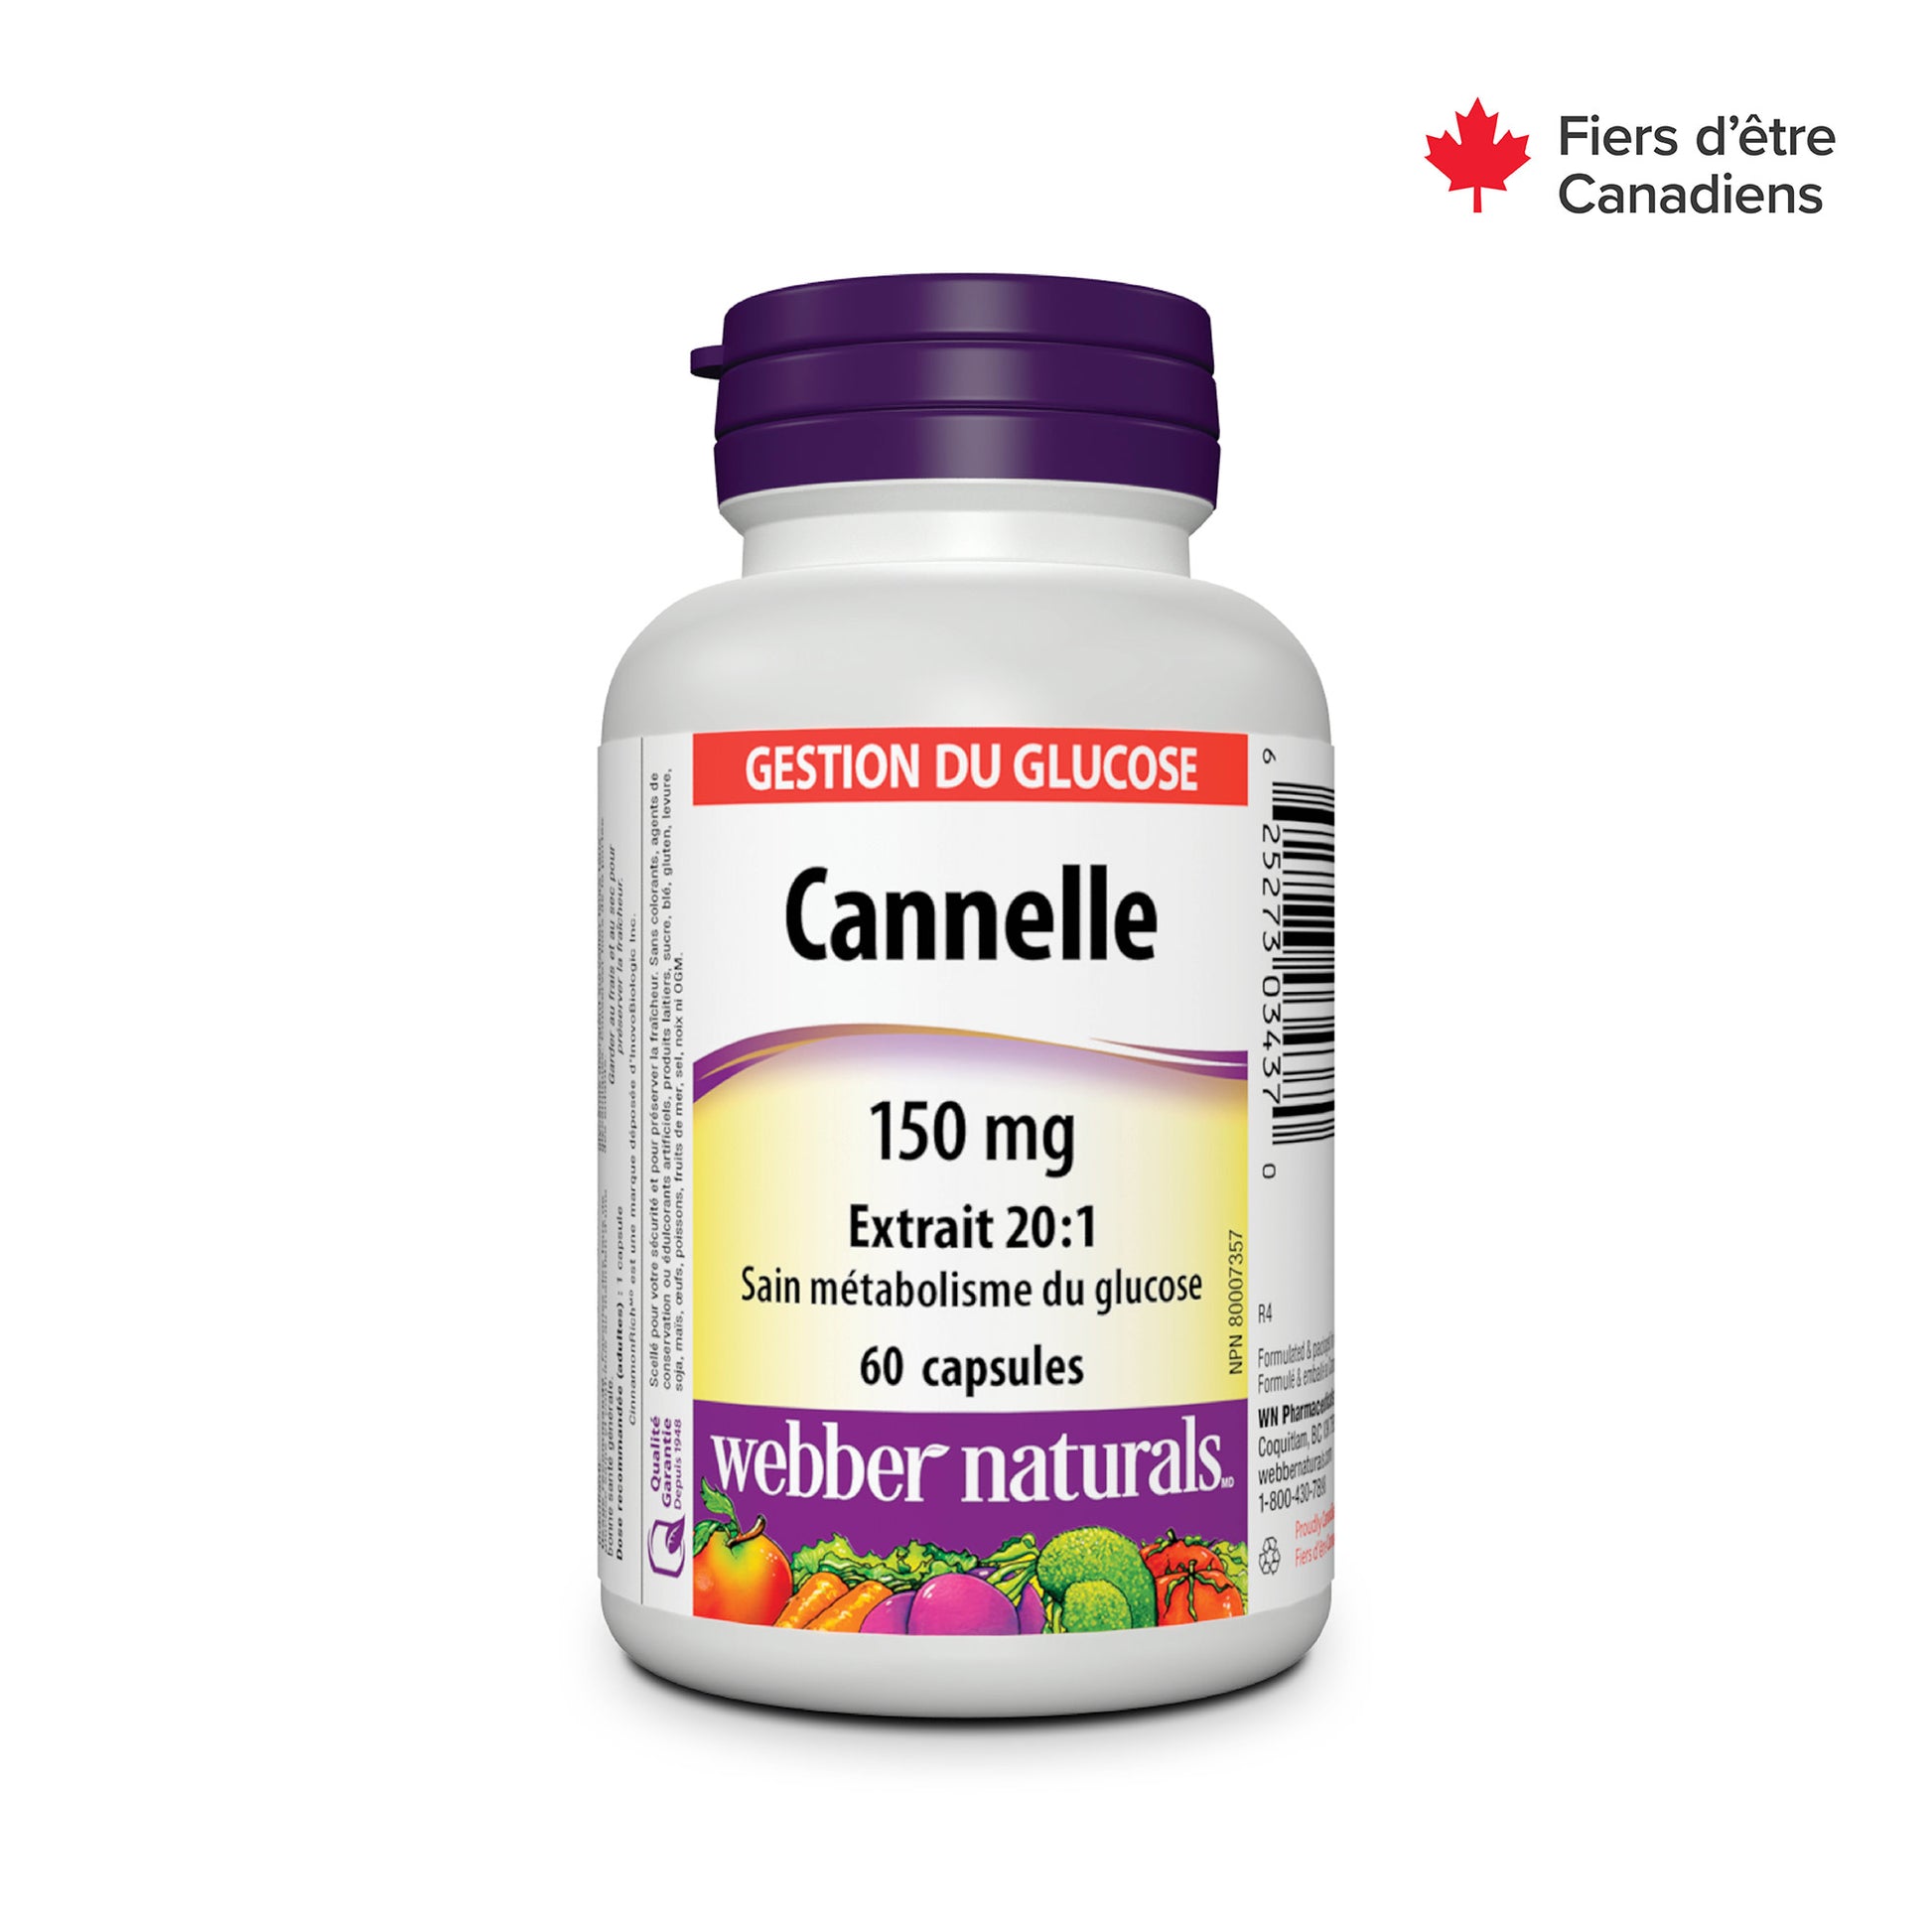 Cinnamon 150 mg for Webber Naturals|v|hi-res|WN3437